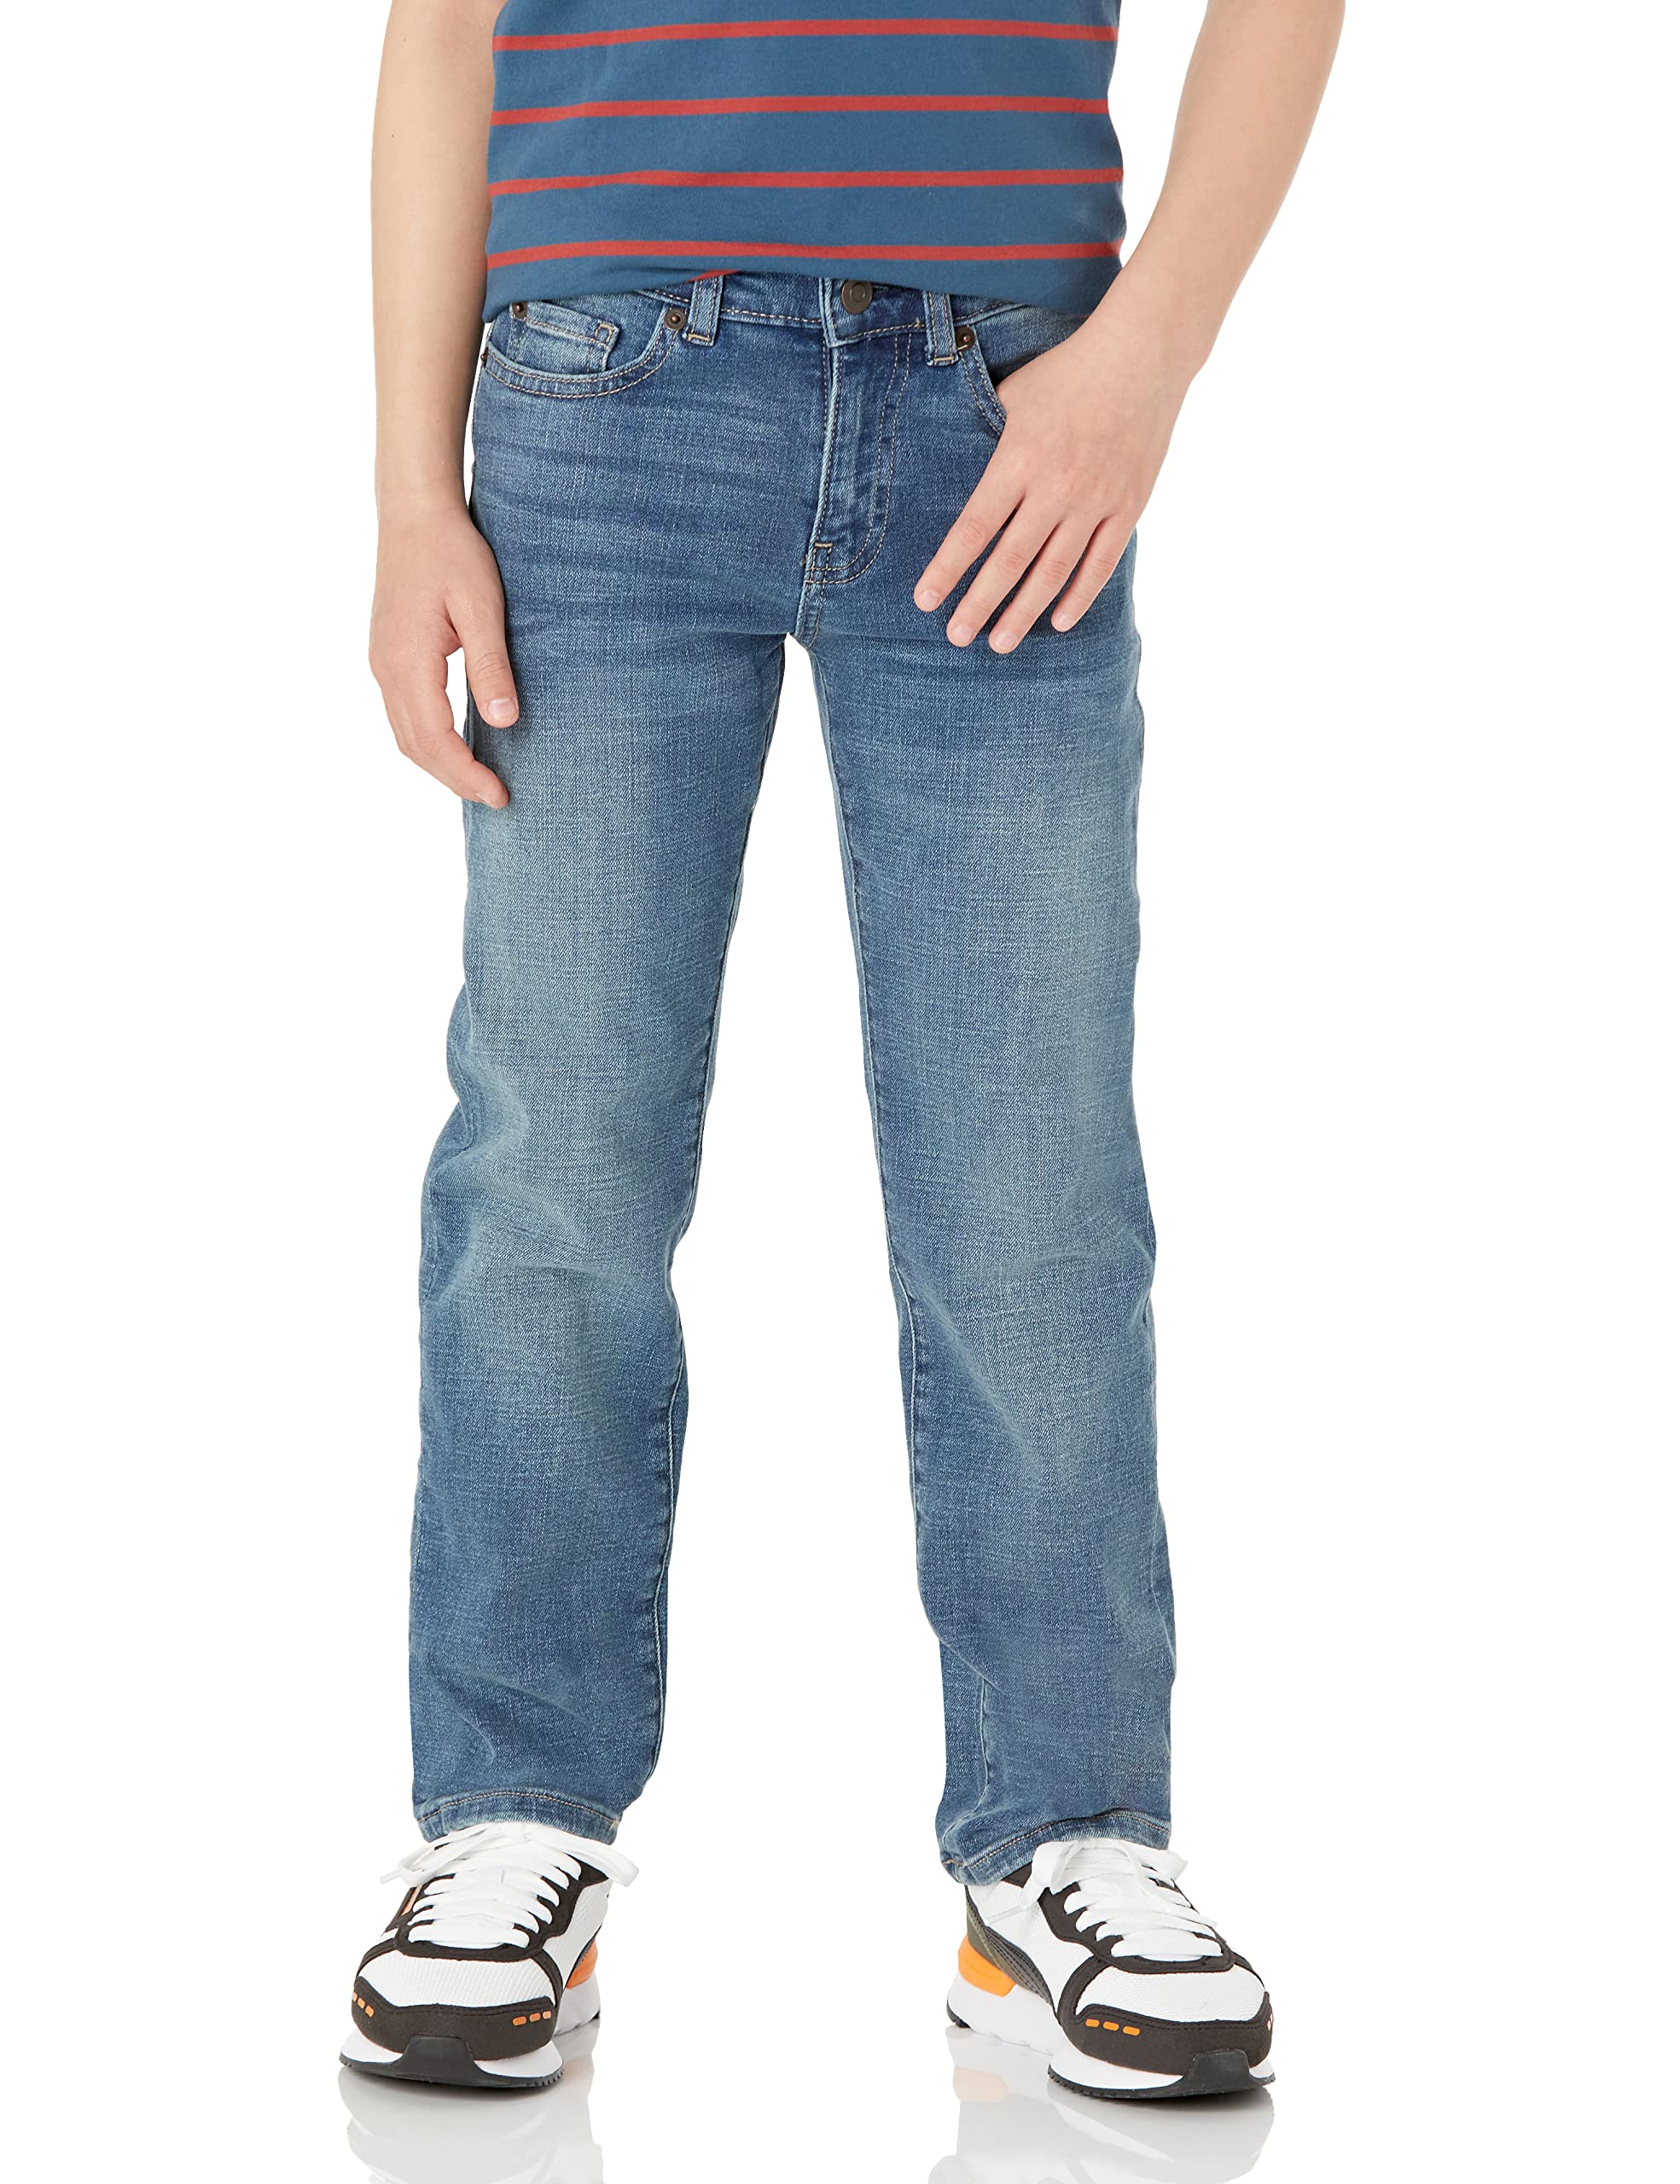 Amazon Essentials Boys' Regular Straight-Fit Jeans